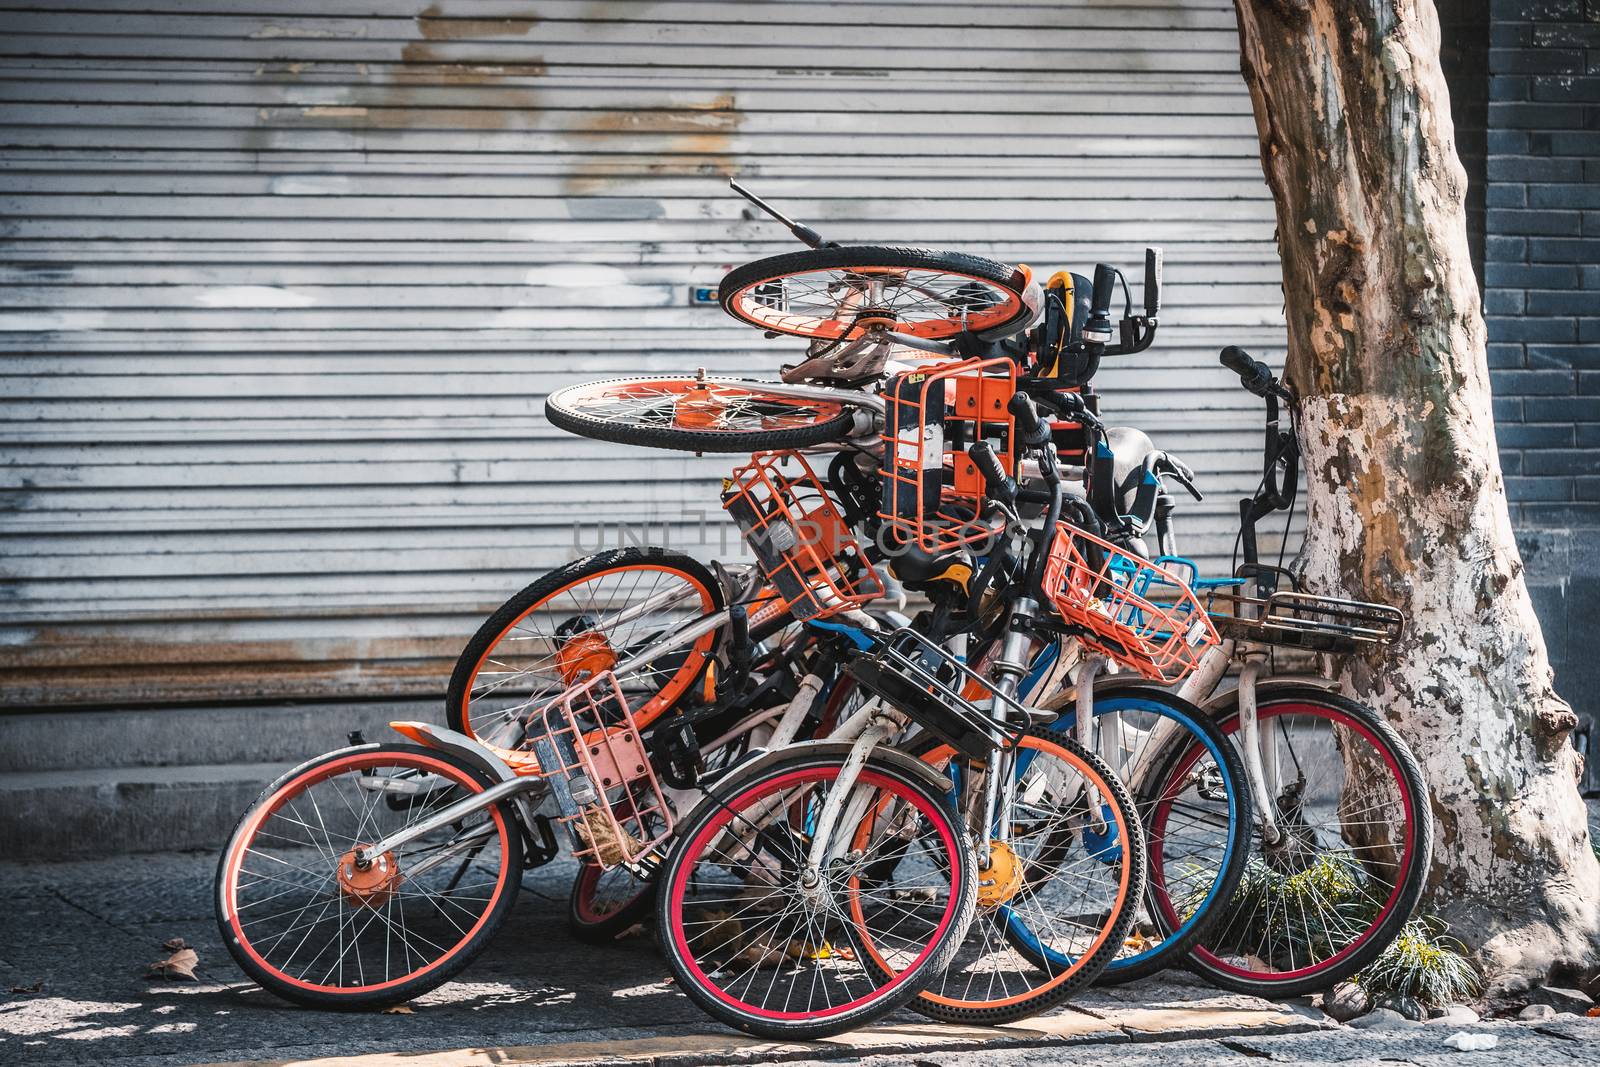 pile of broken electric bikes on the sidewalk, Hangzhou, China